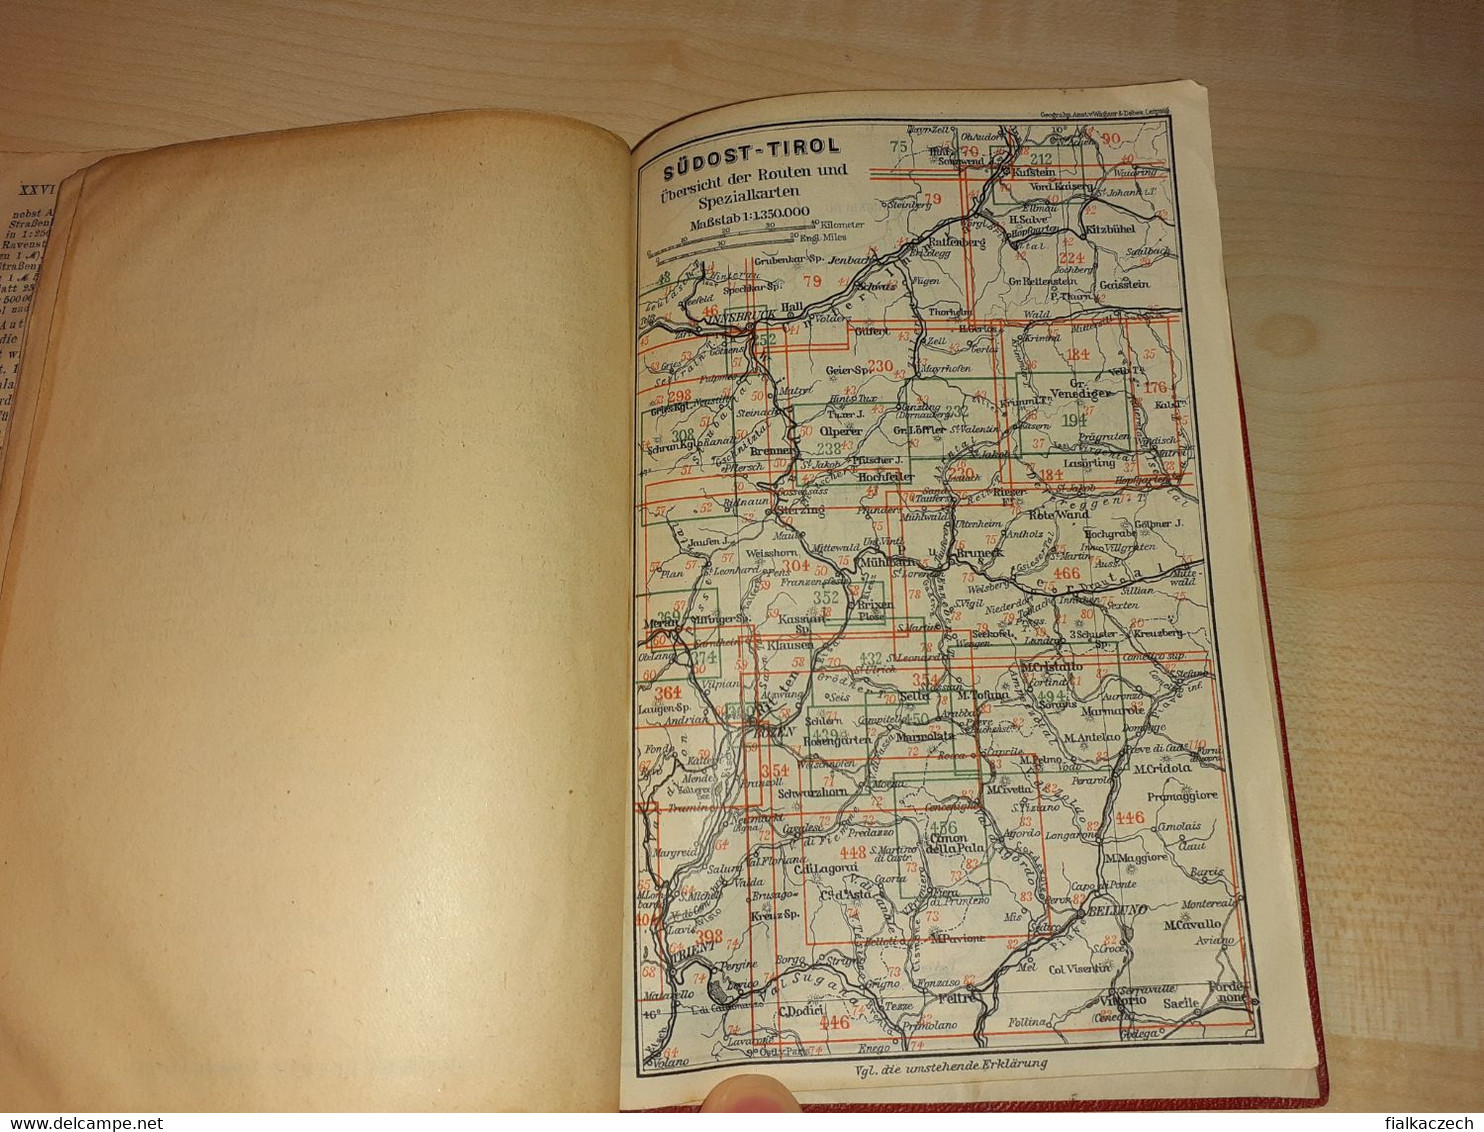 Baedekers, Südbayern Tirol Salzburg Tour Guide, 1914, Germany, Austria + Another Südtirol Tour Guide - Non Classés